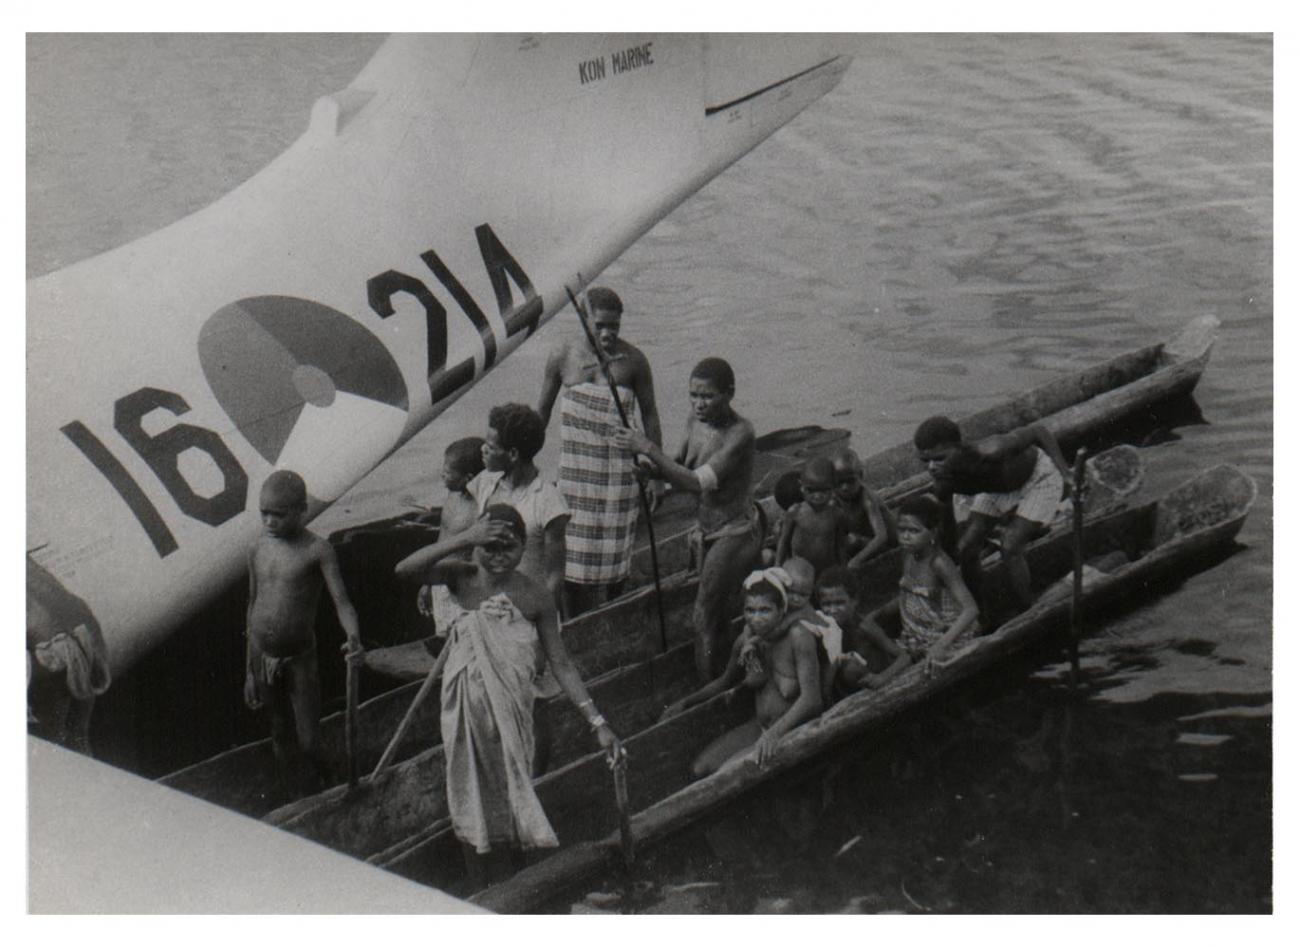 BD/54/19 - 
Aermaroe, canoes by seaplane
